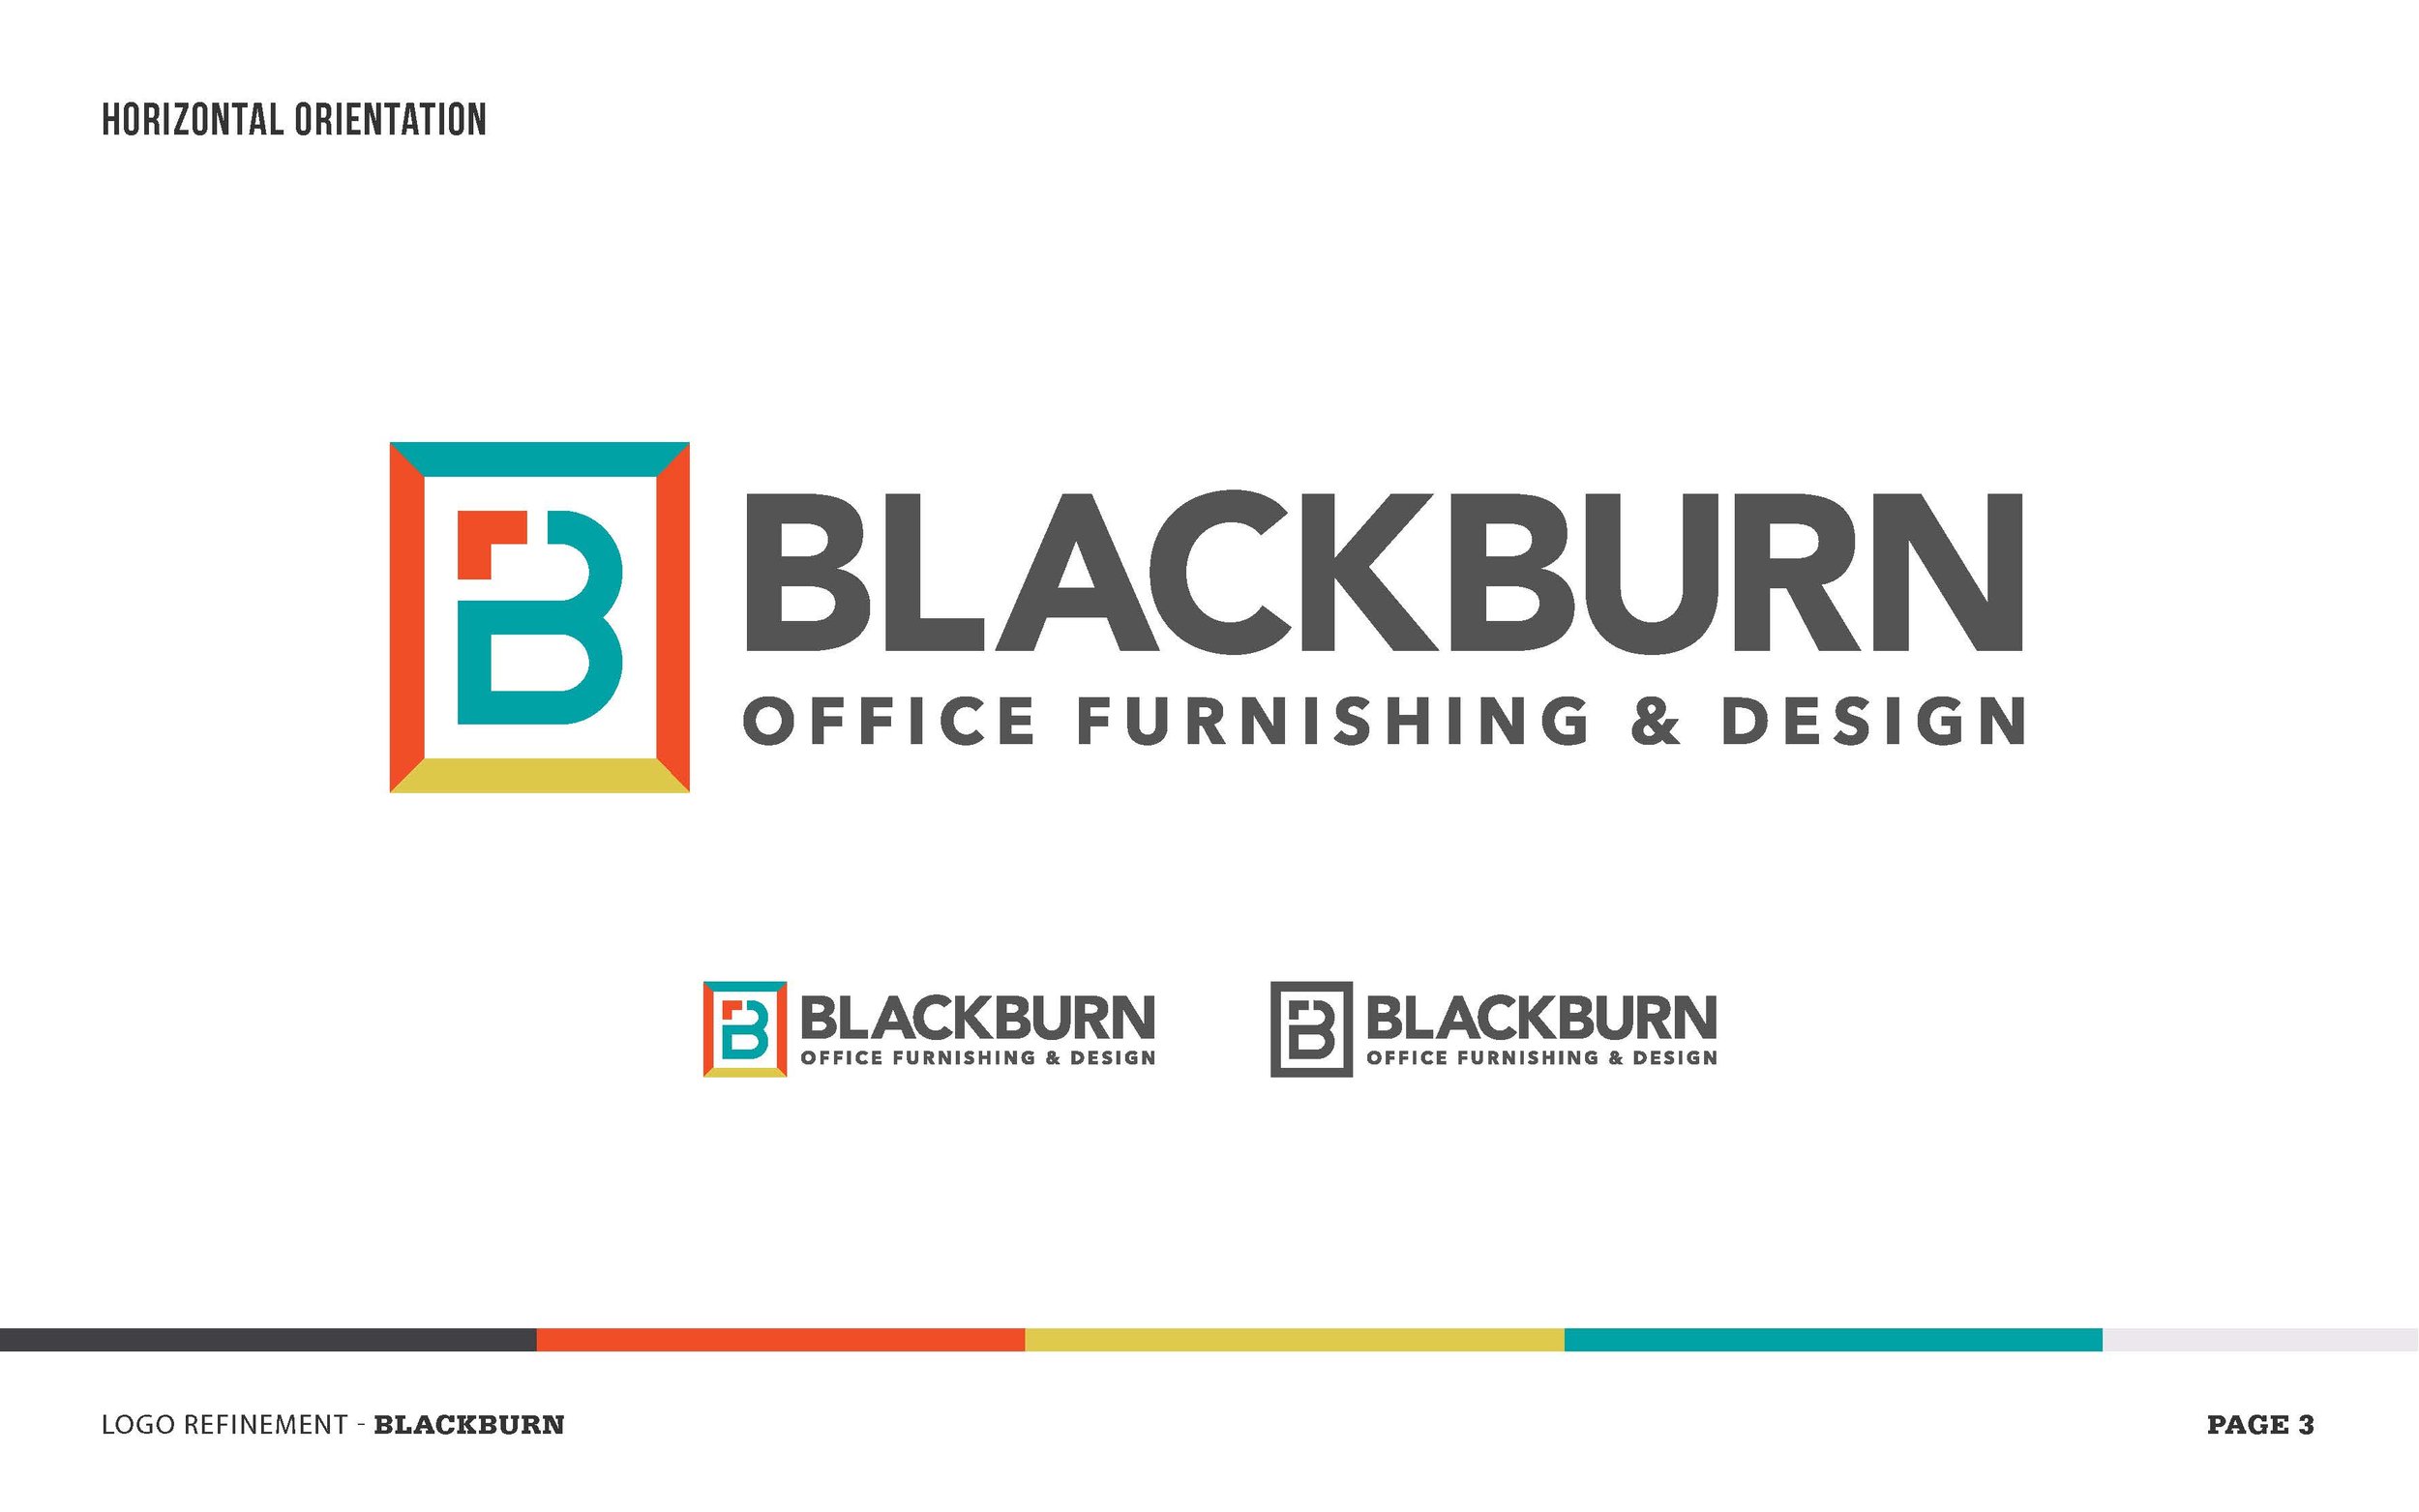 blkbrn-logo-refinement-presentation-V1_Page_3.jpg